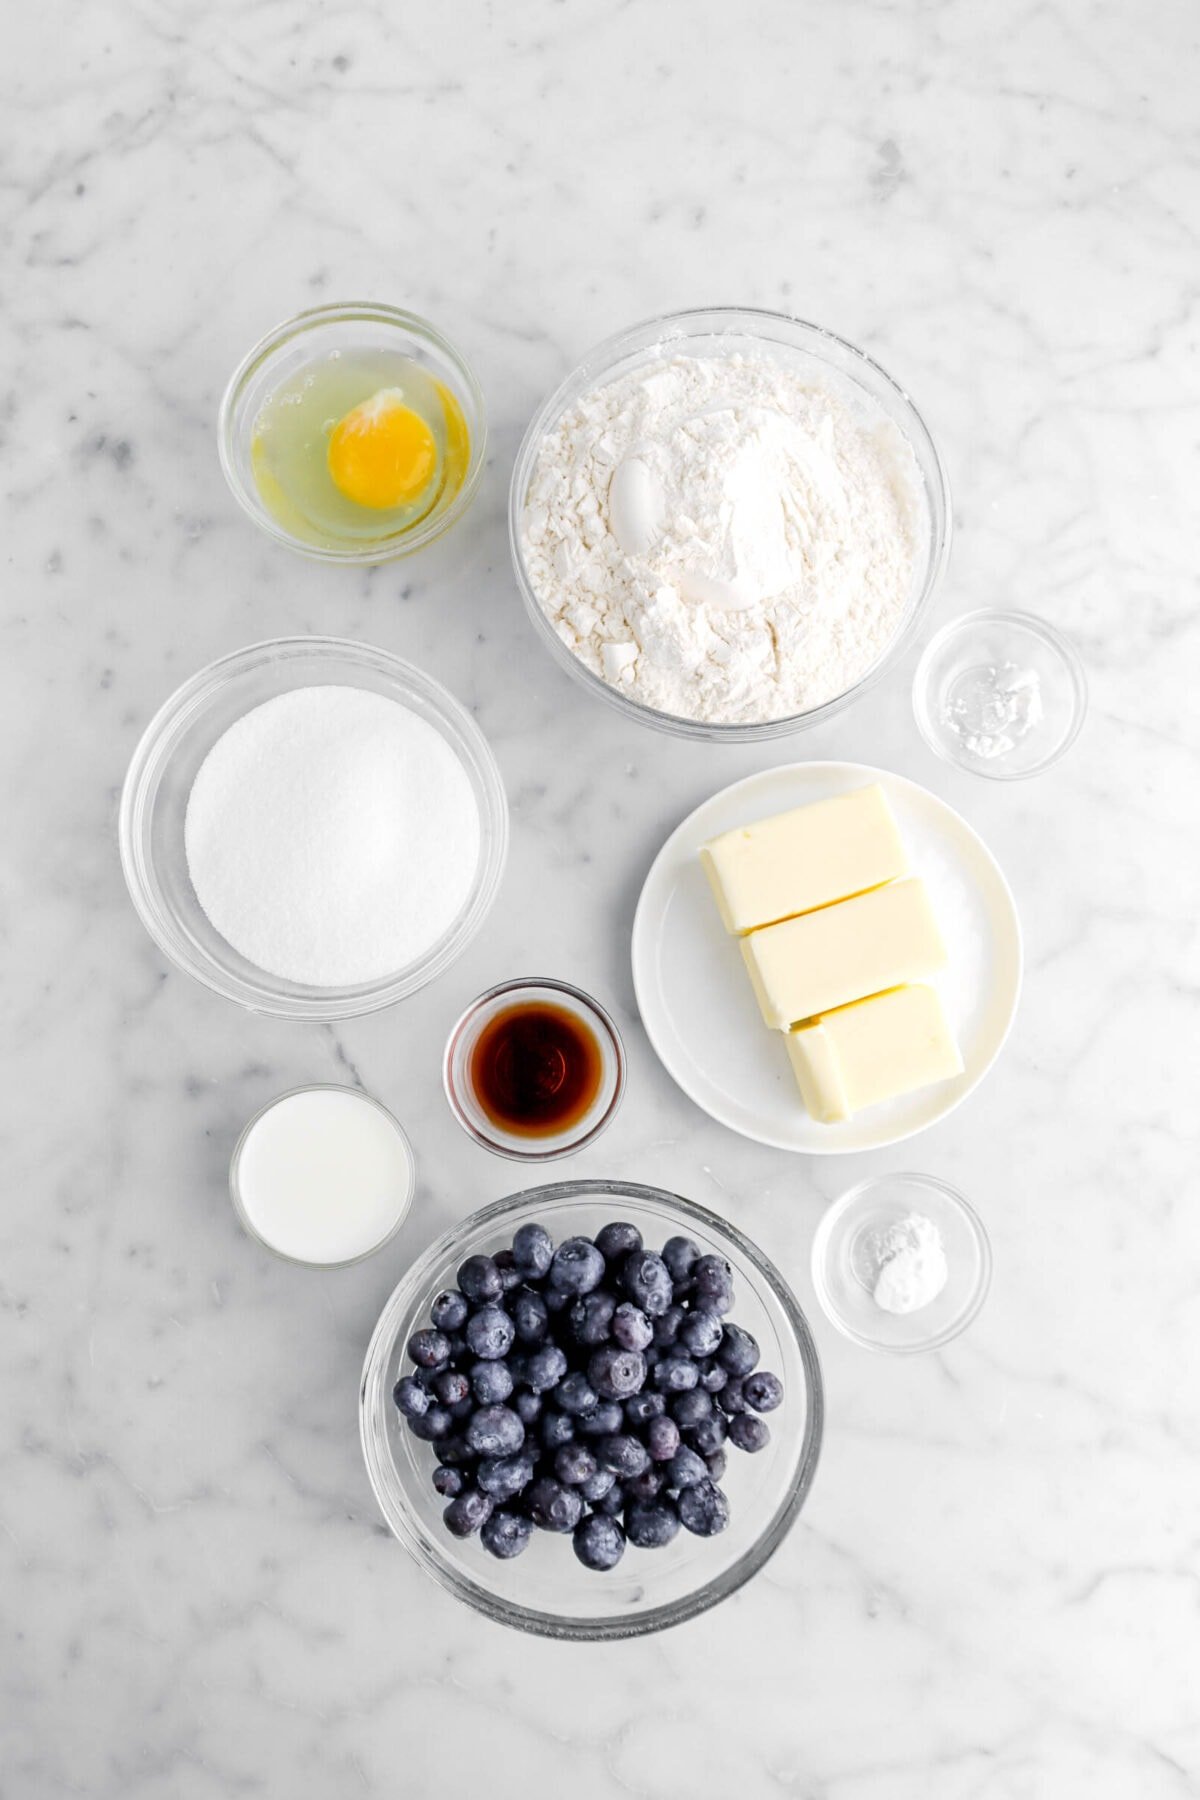 egg, flour, sugar, baking powder, butter, vanilla, milk, baking soda, and fresh blueberries on marble surface.